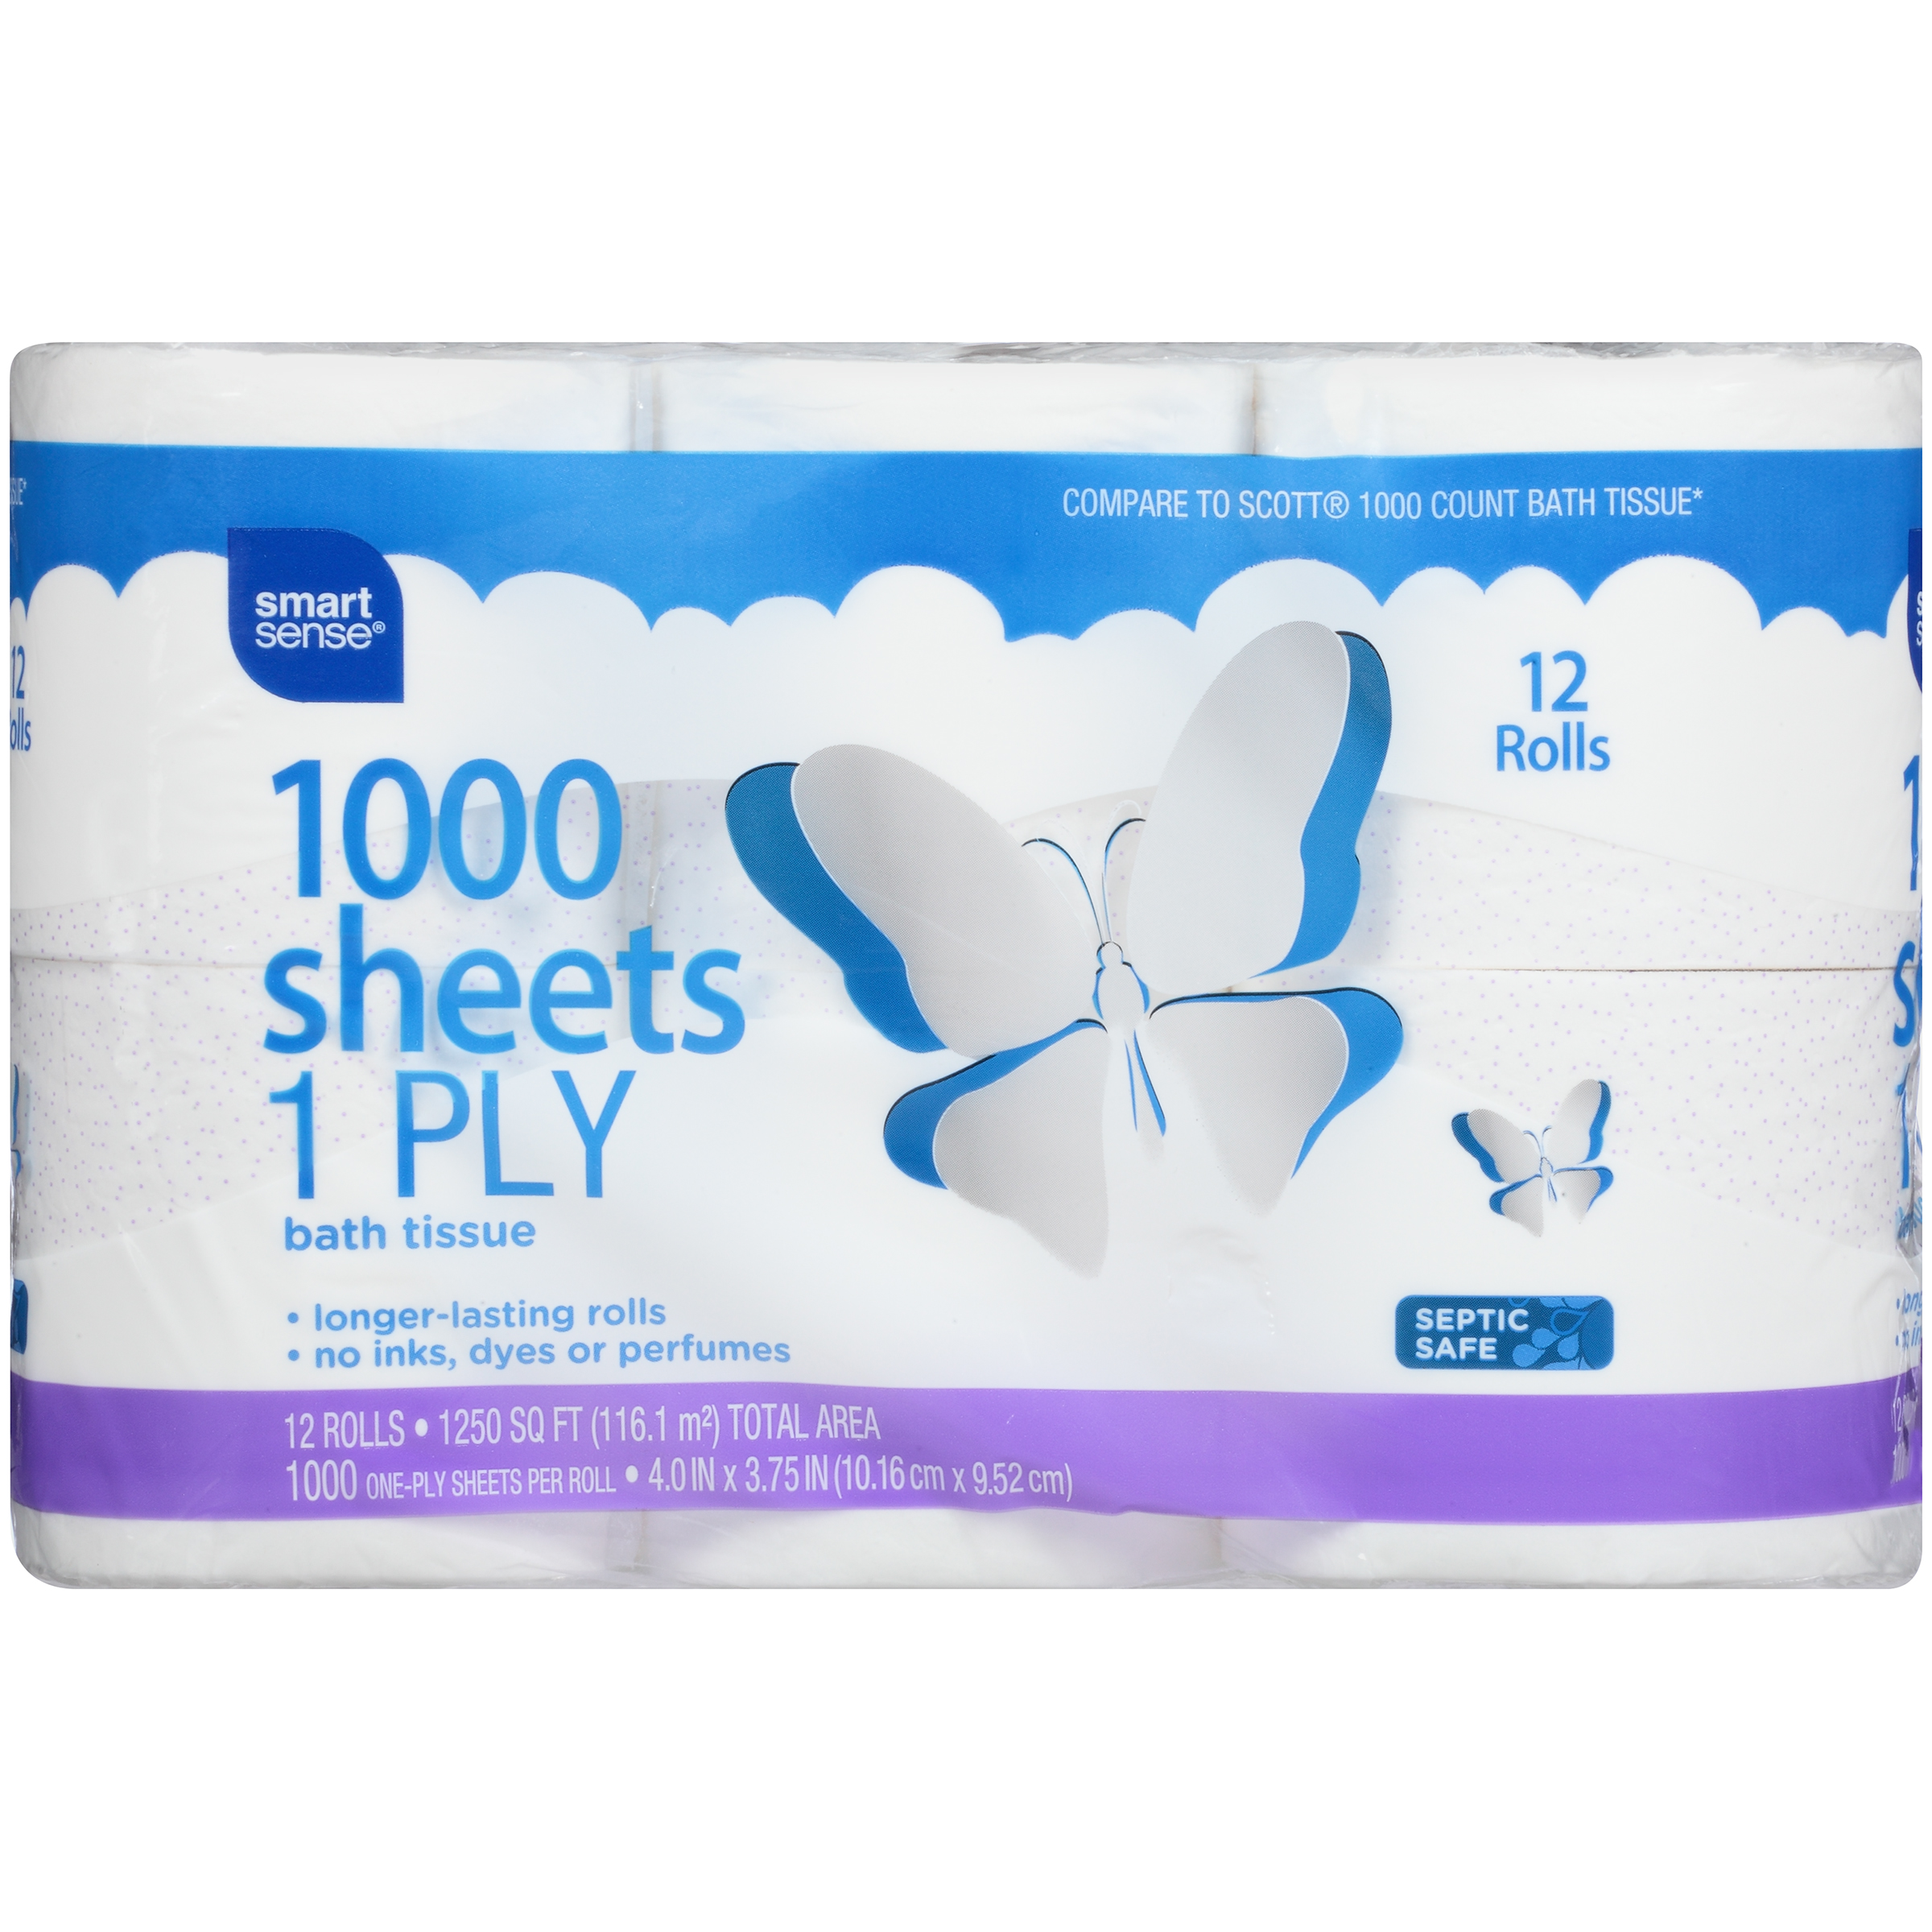 Smart Sense 1000 Sheets 1 Ply Bath Tissue 12 Rolls